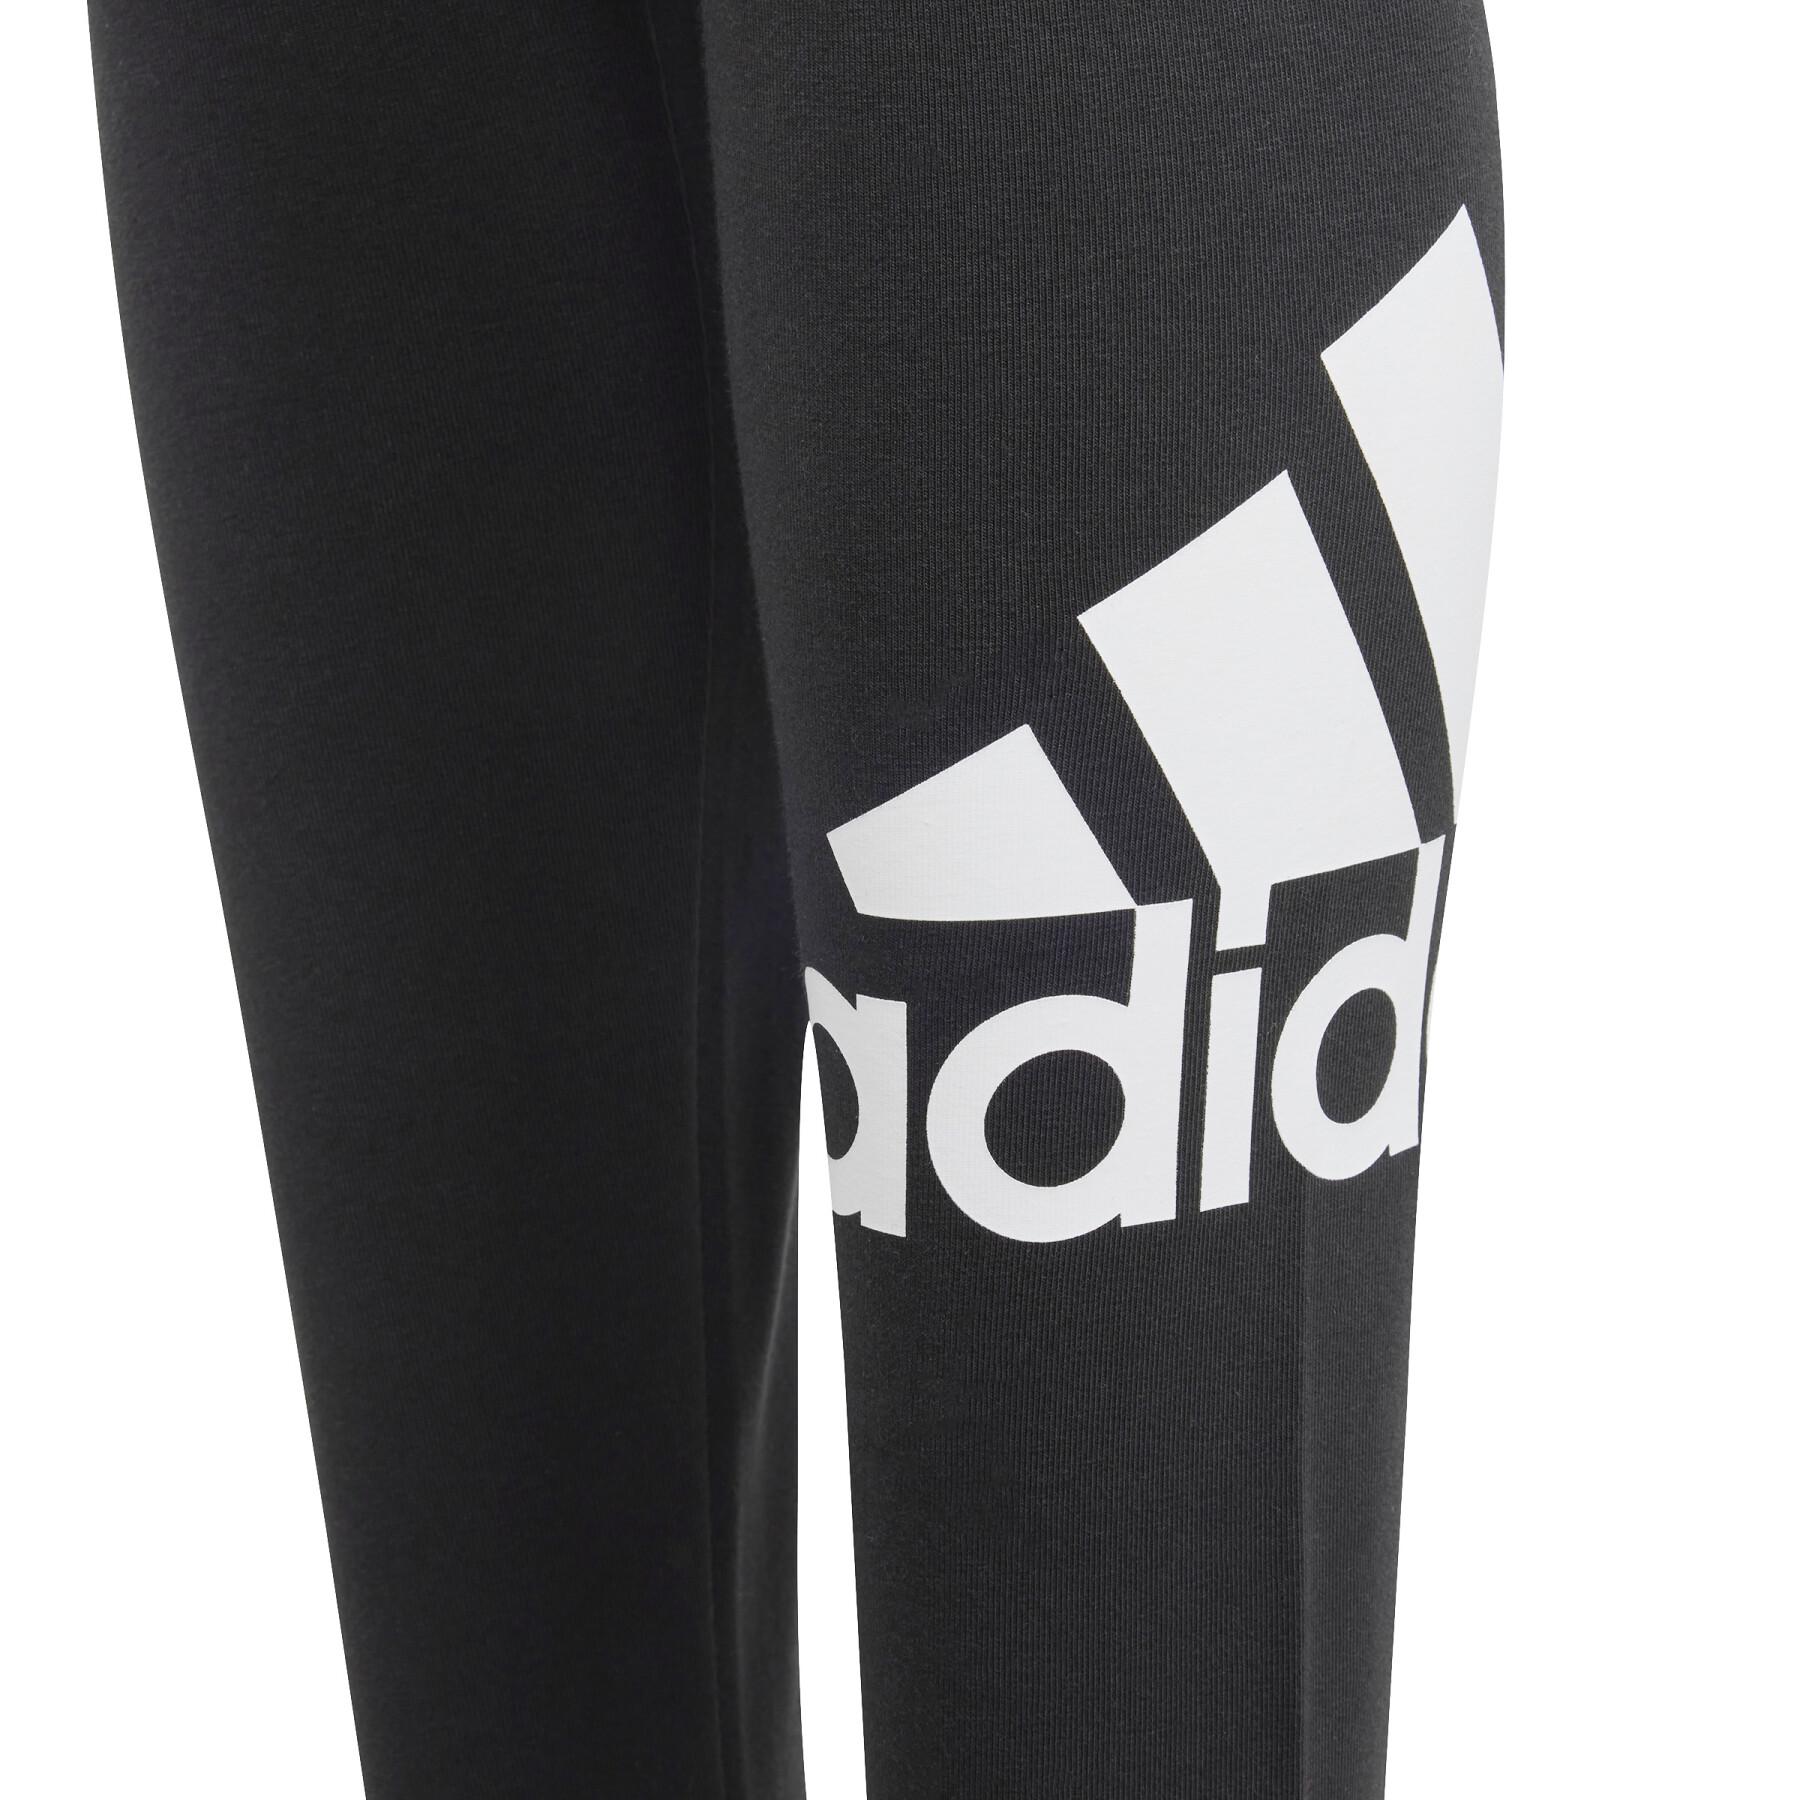 Handball - Legging Baselayers Textile - Big girl Essentials adidas - wear Logo cotton